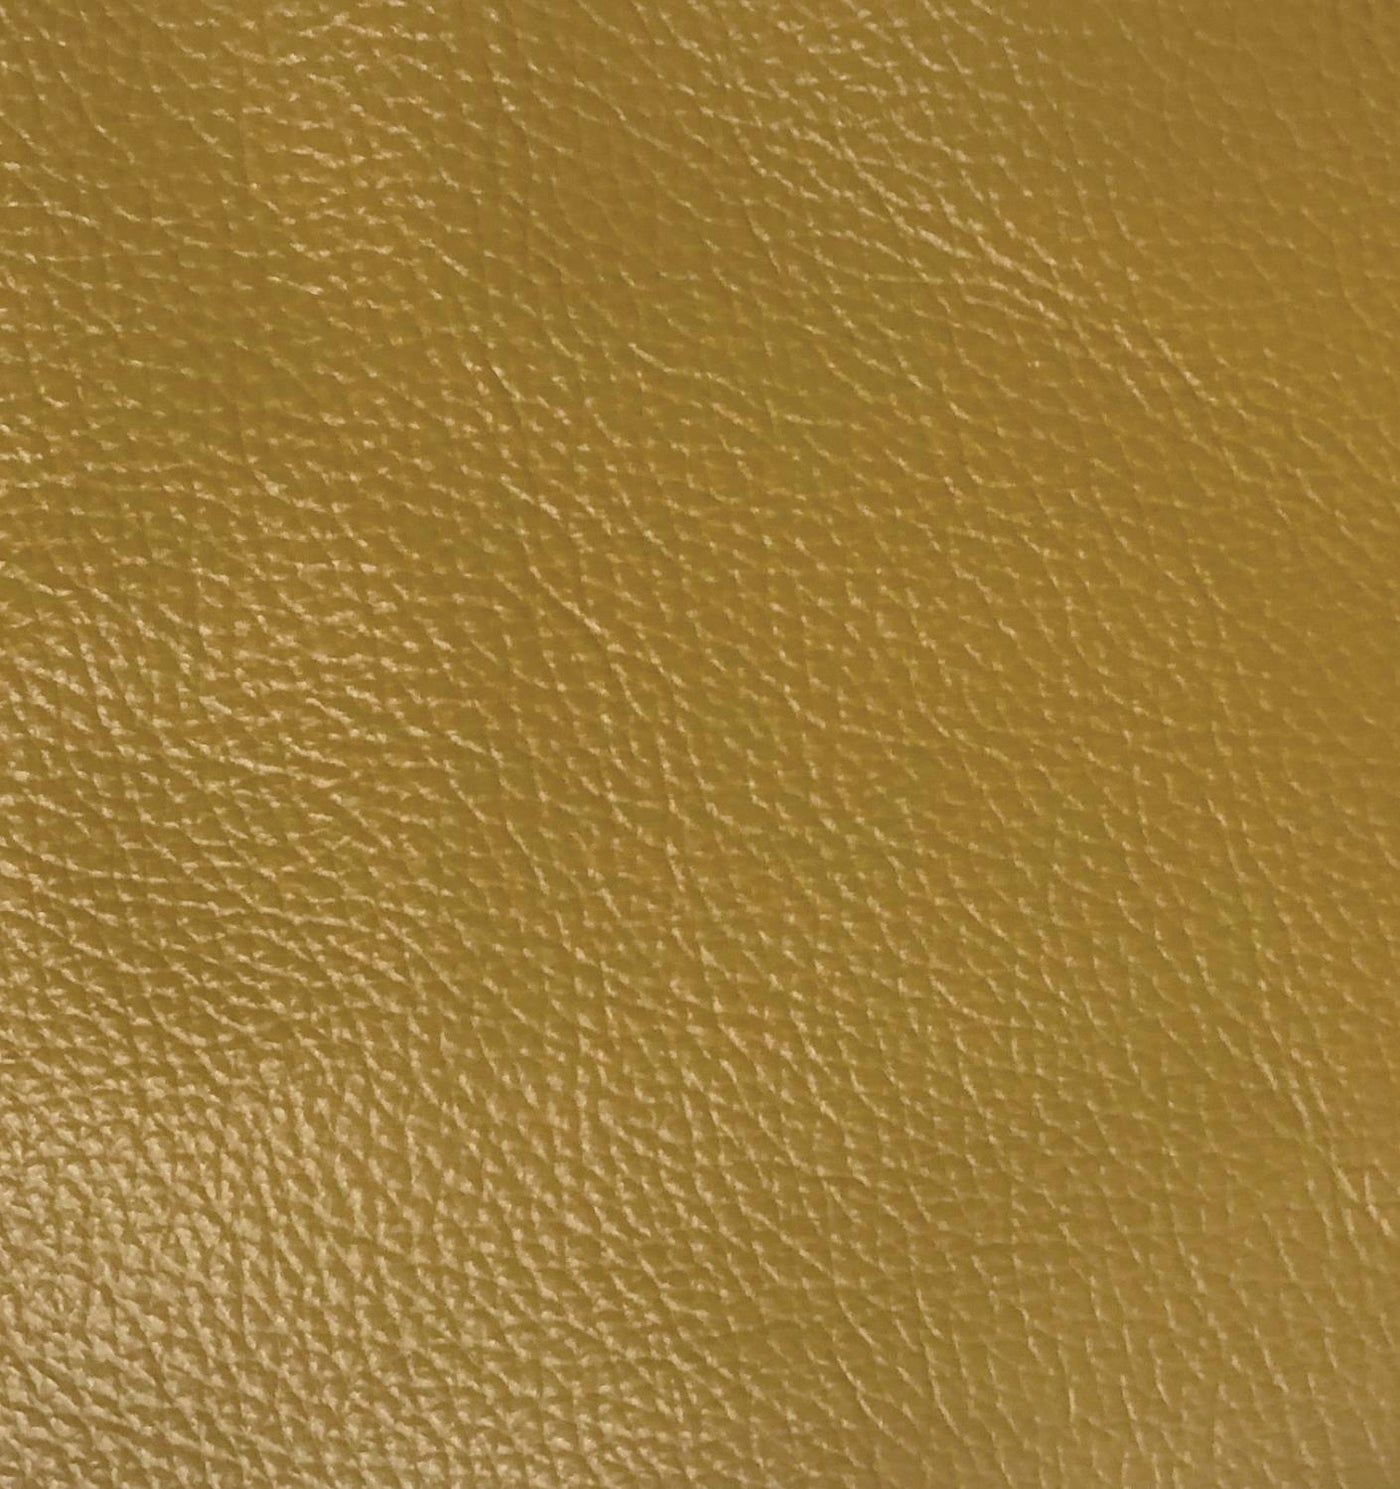 Jon Perse Leather Chair - Mustard